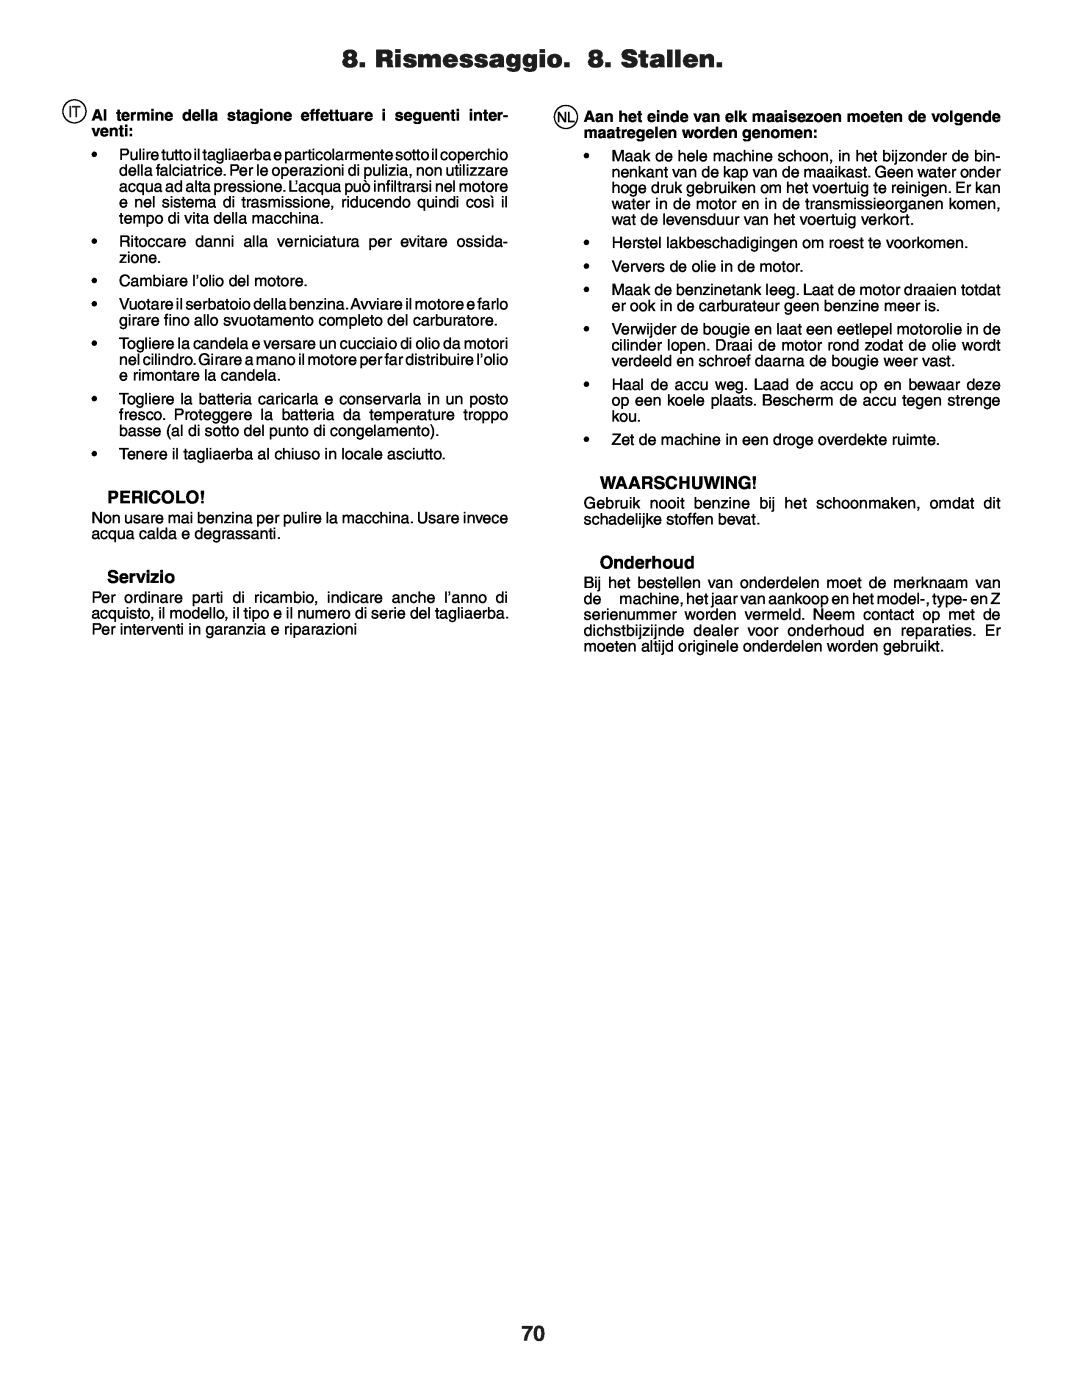 Husqvarna YTH150XP instruction manual Rismessaggio. 8. Stallen, Pericolo, Servizio, Waarschuwing, Onderhoud 